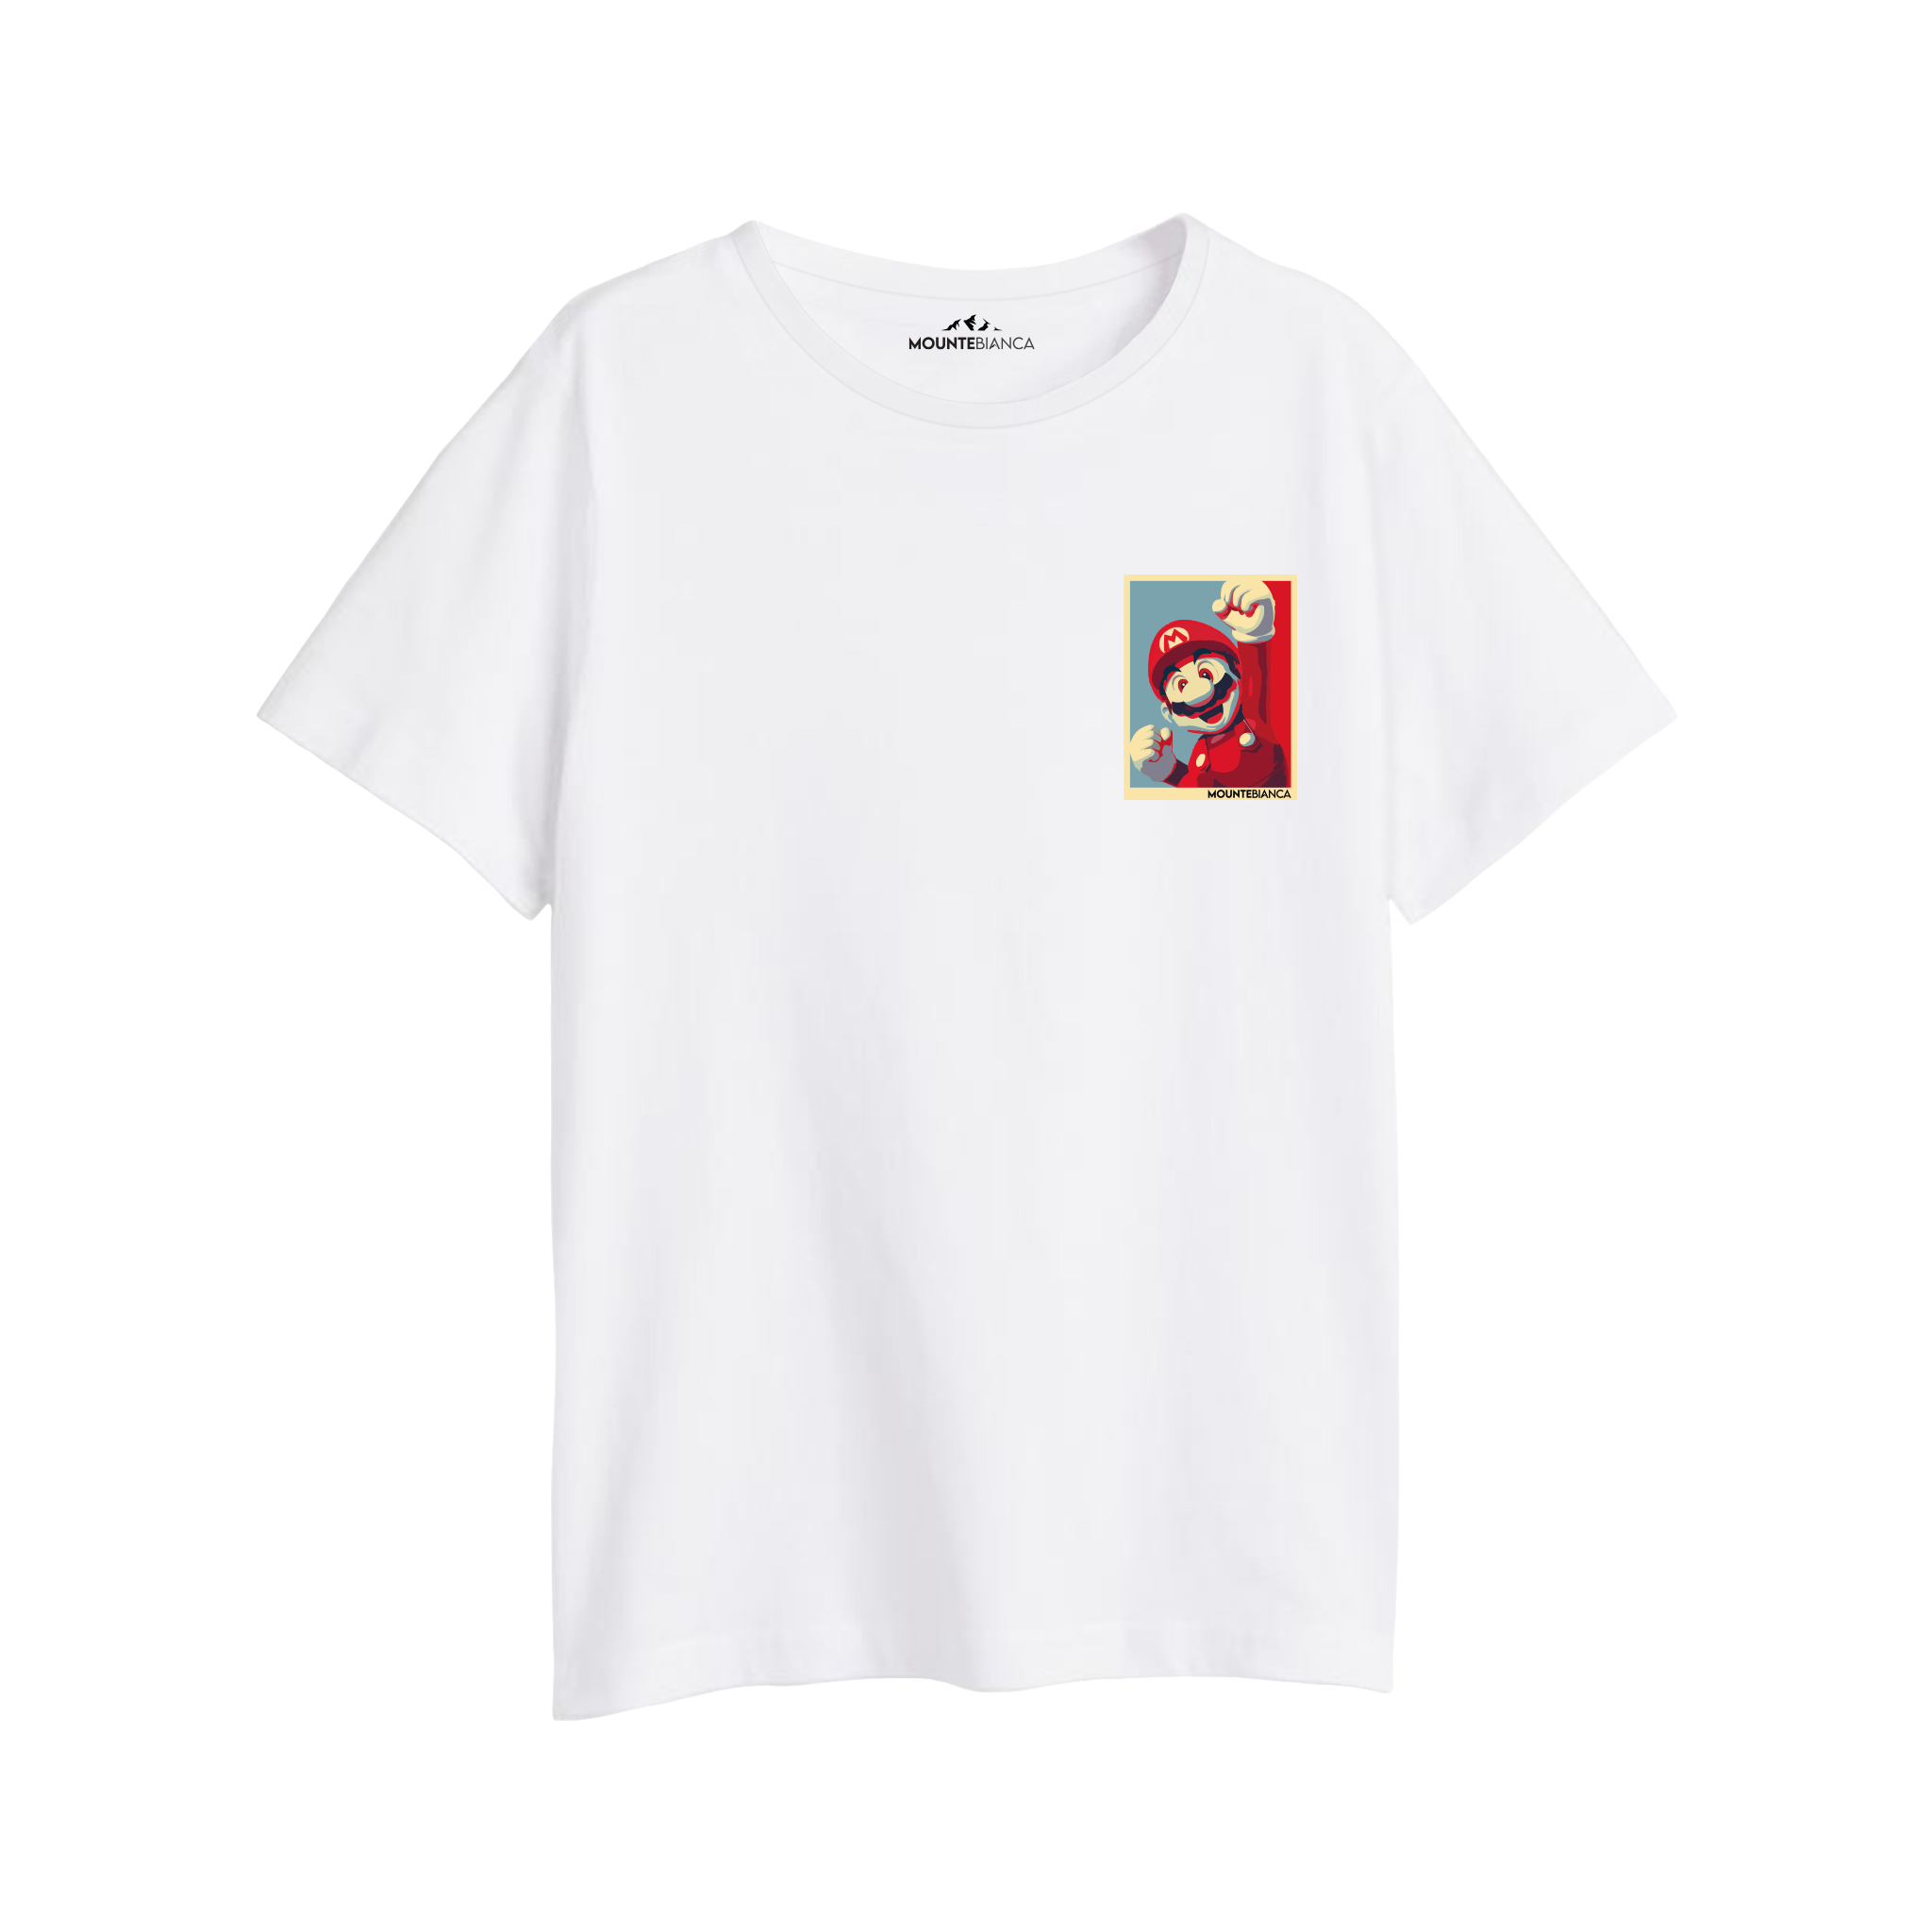 Miami - Çocuk T-Shirt